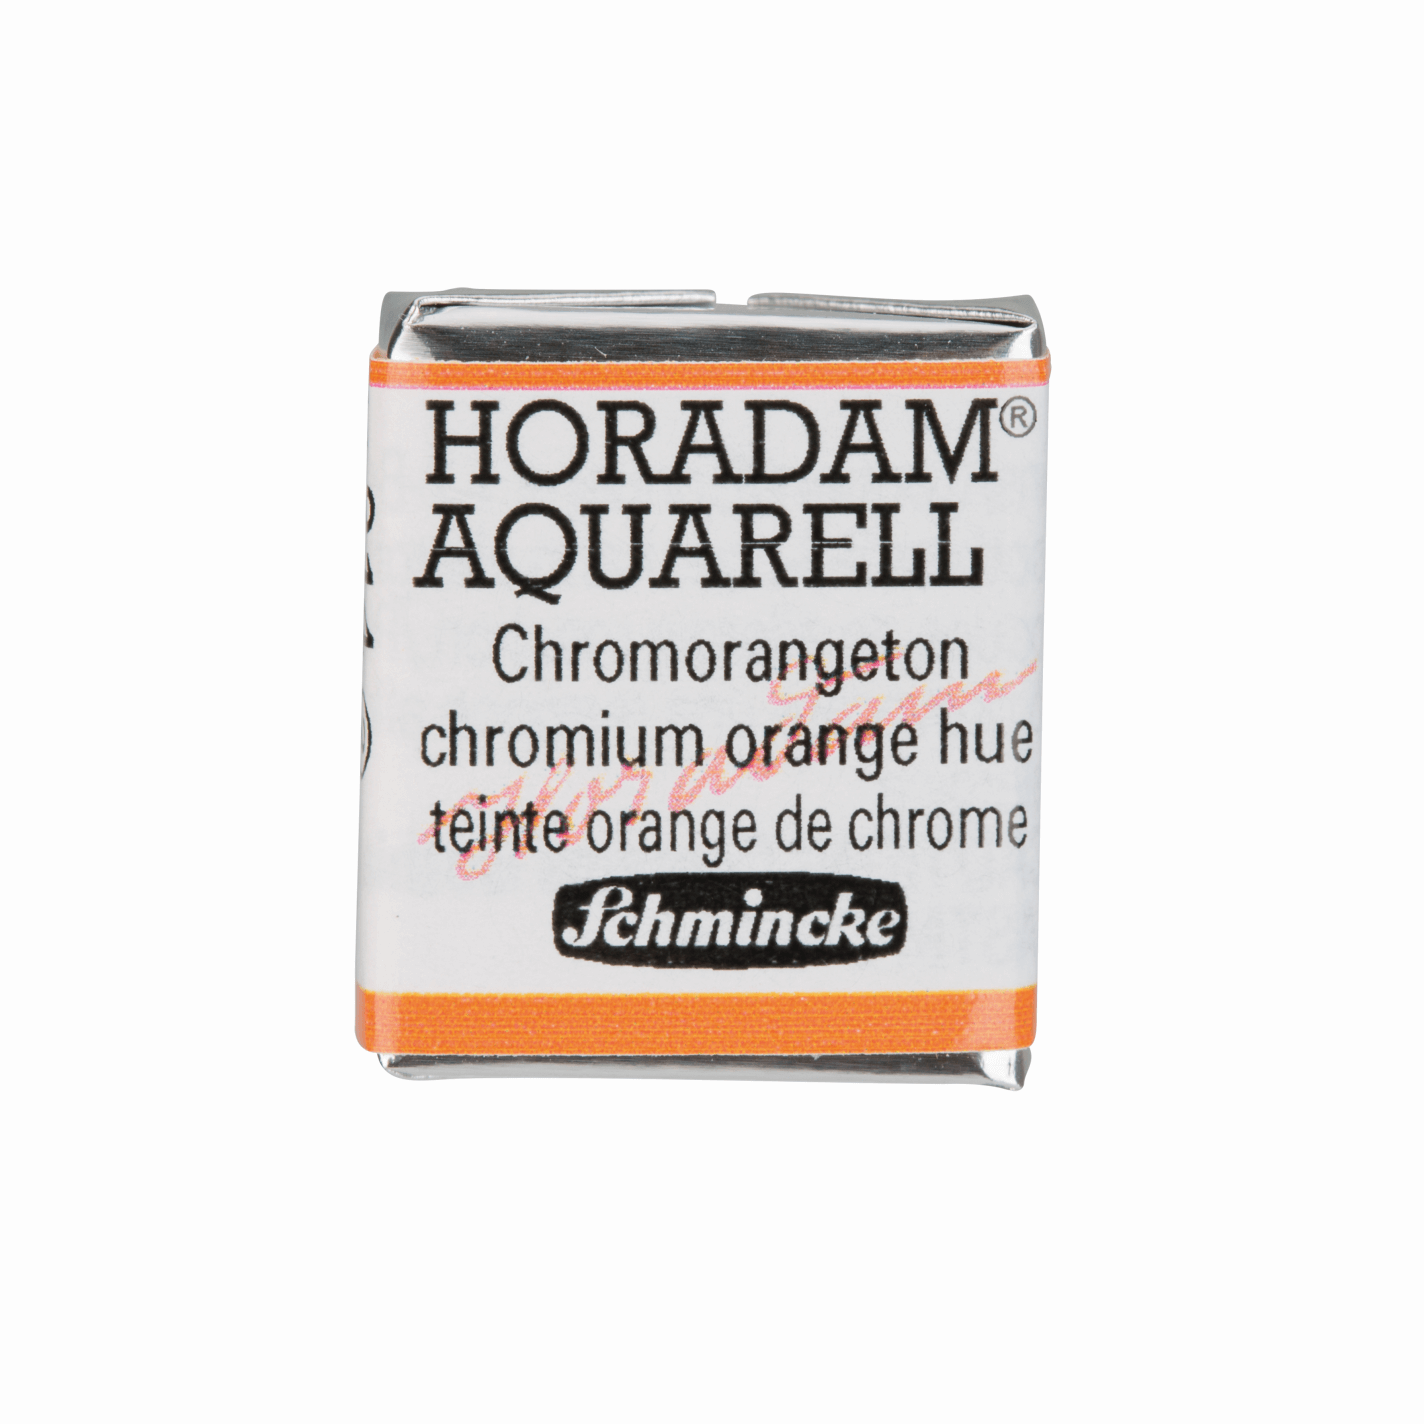 Schmincke Horadam Aquarell pans 1/2 pan Chromium Orange Hue